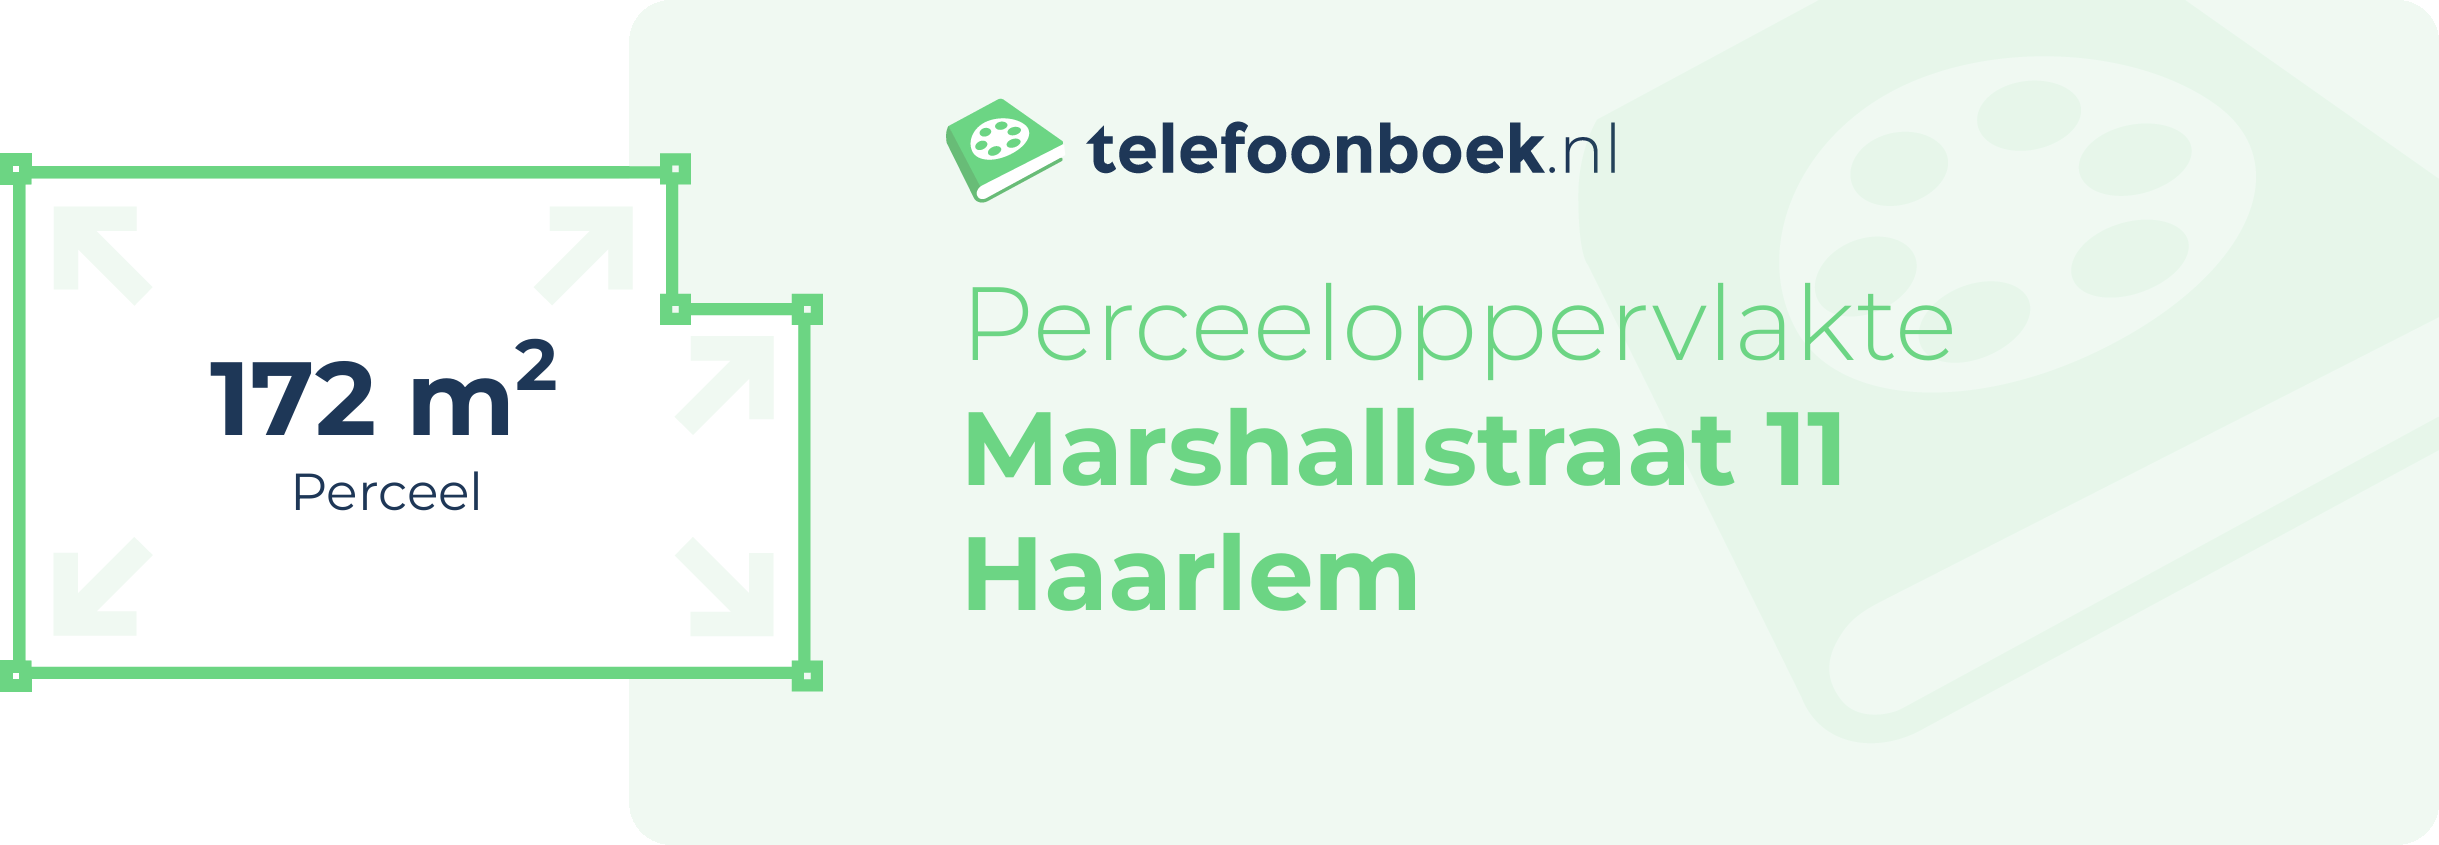 Perceeloppervlakte Marshallstraat 11 Haarlem